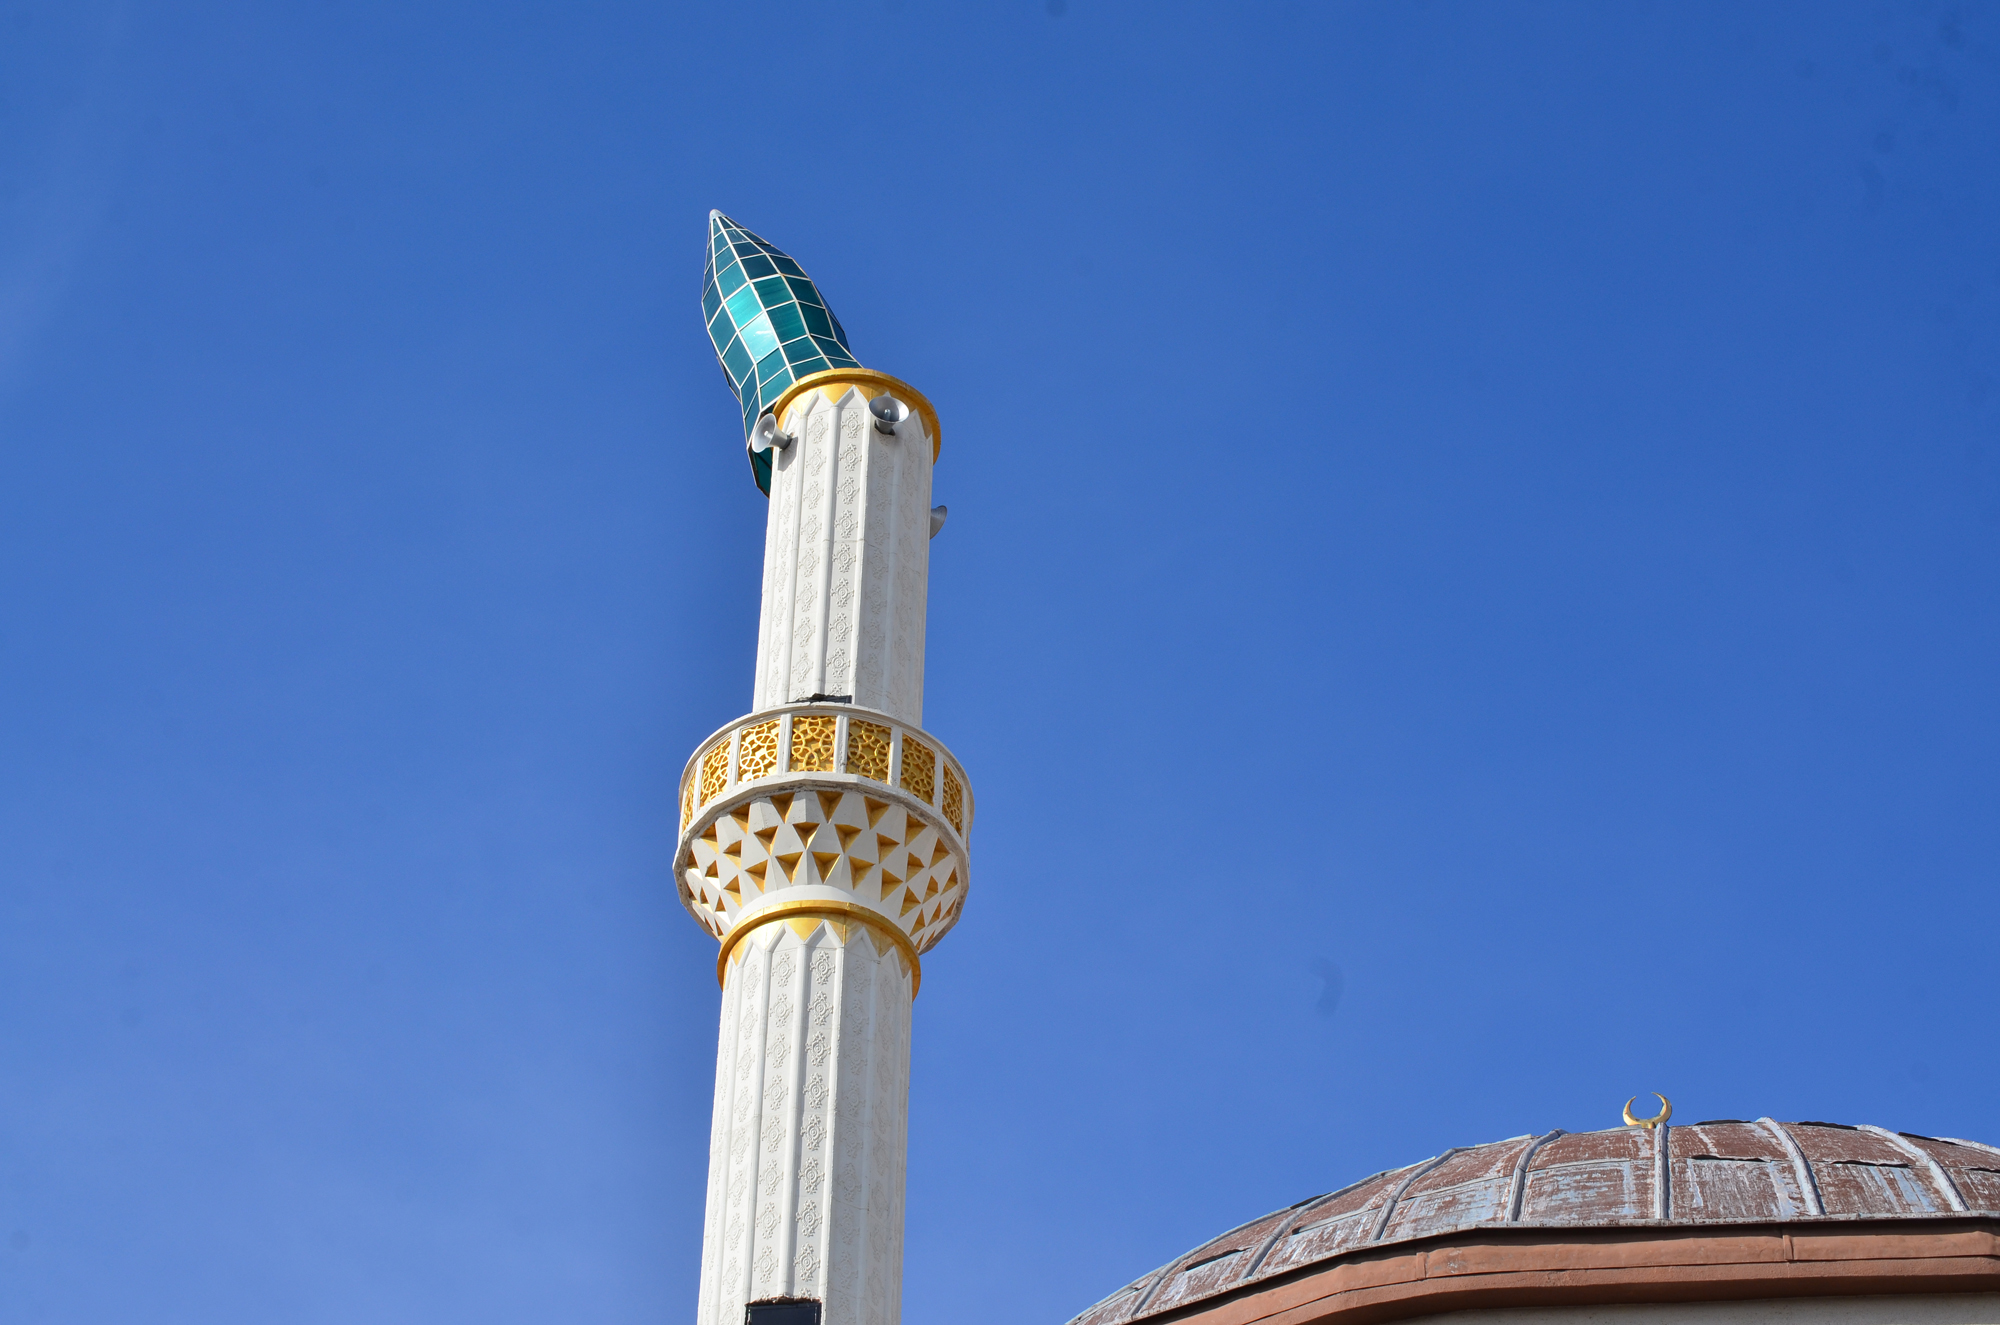 siddetli-ruzgar-minarenin-kulahini-soktu-8506-dhaphoto8.jpg